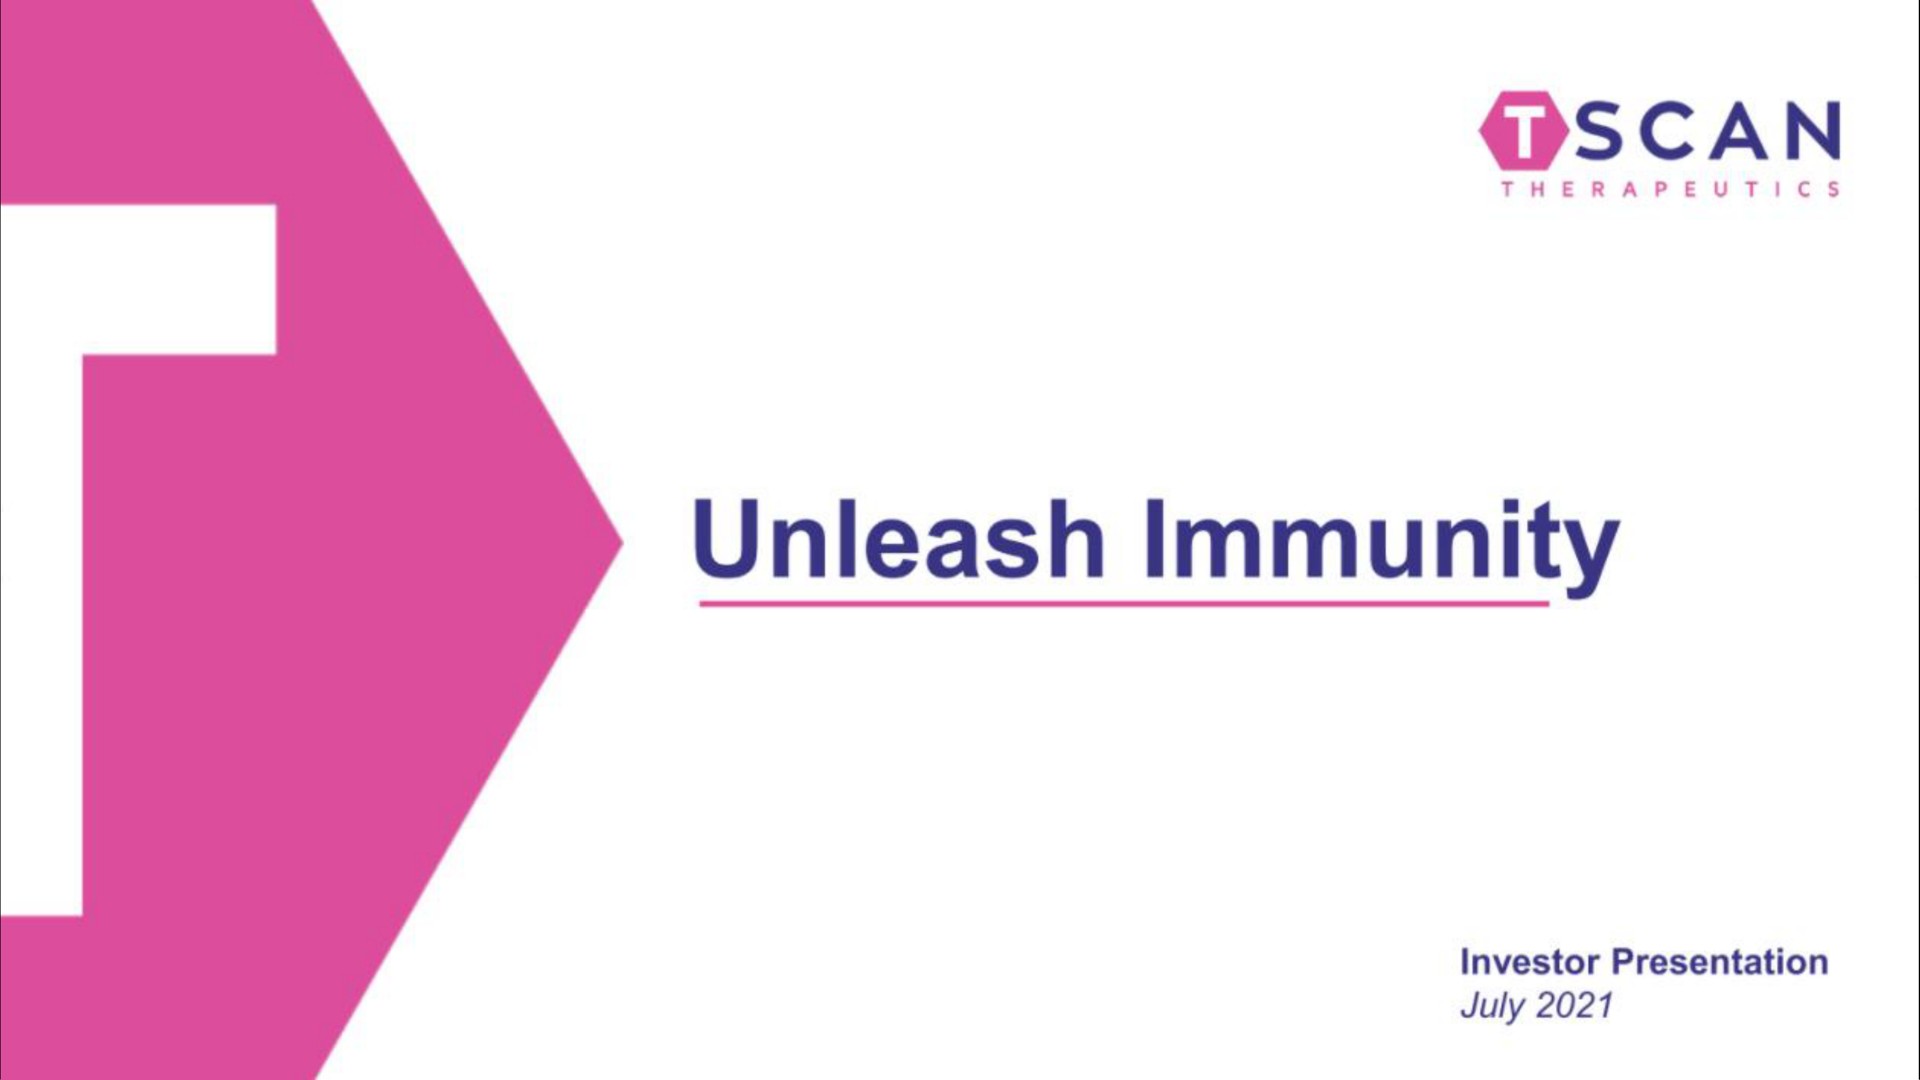 unleash immunity | TScan Therapeutics